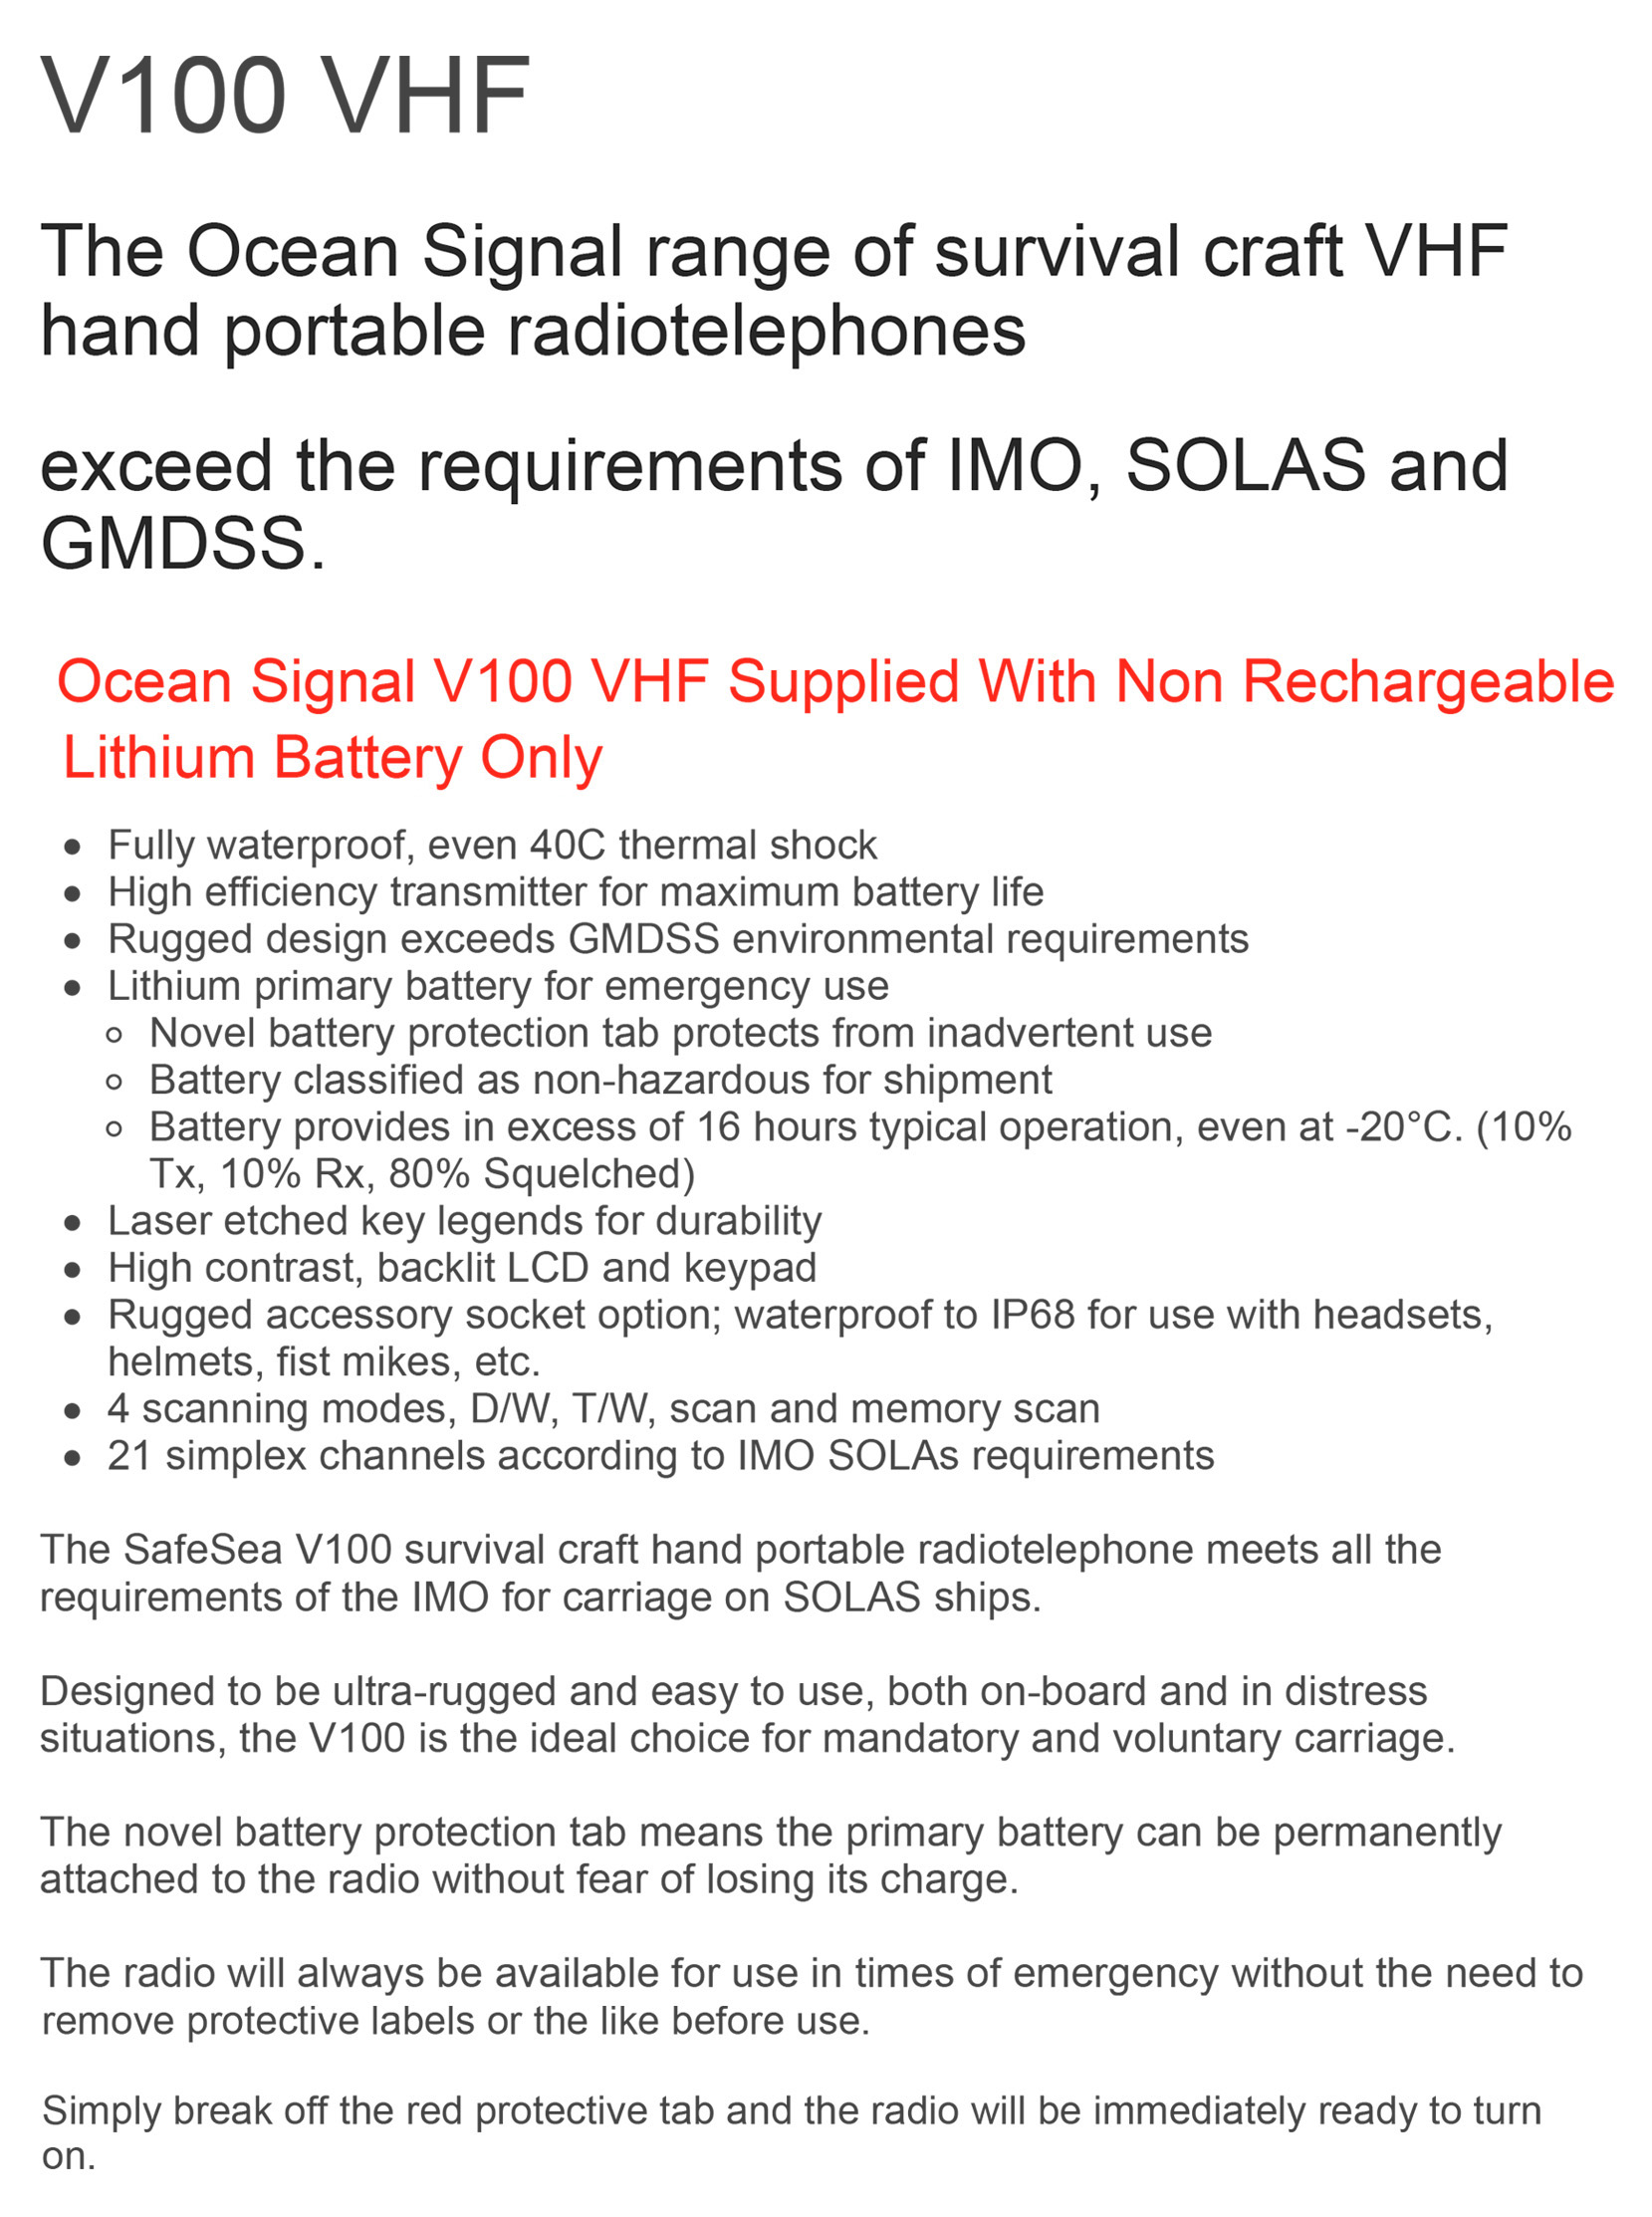 Ocean Signal V100 GMDSS VHF Handheld Radio